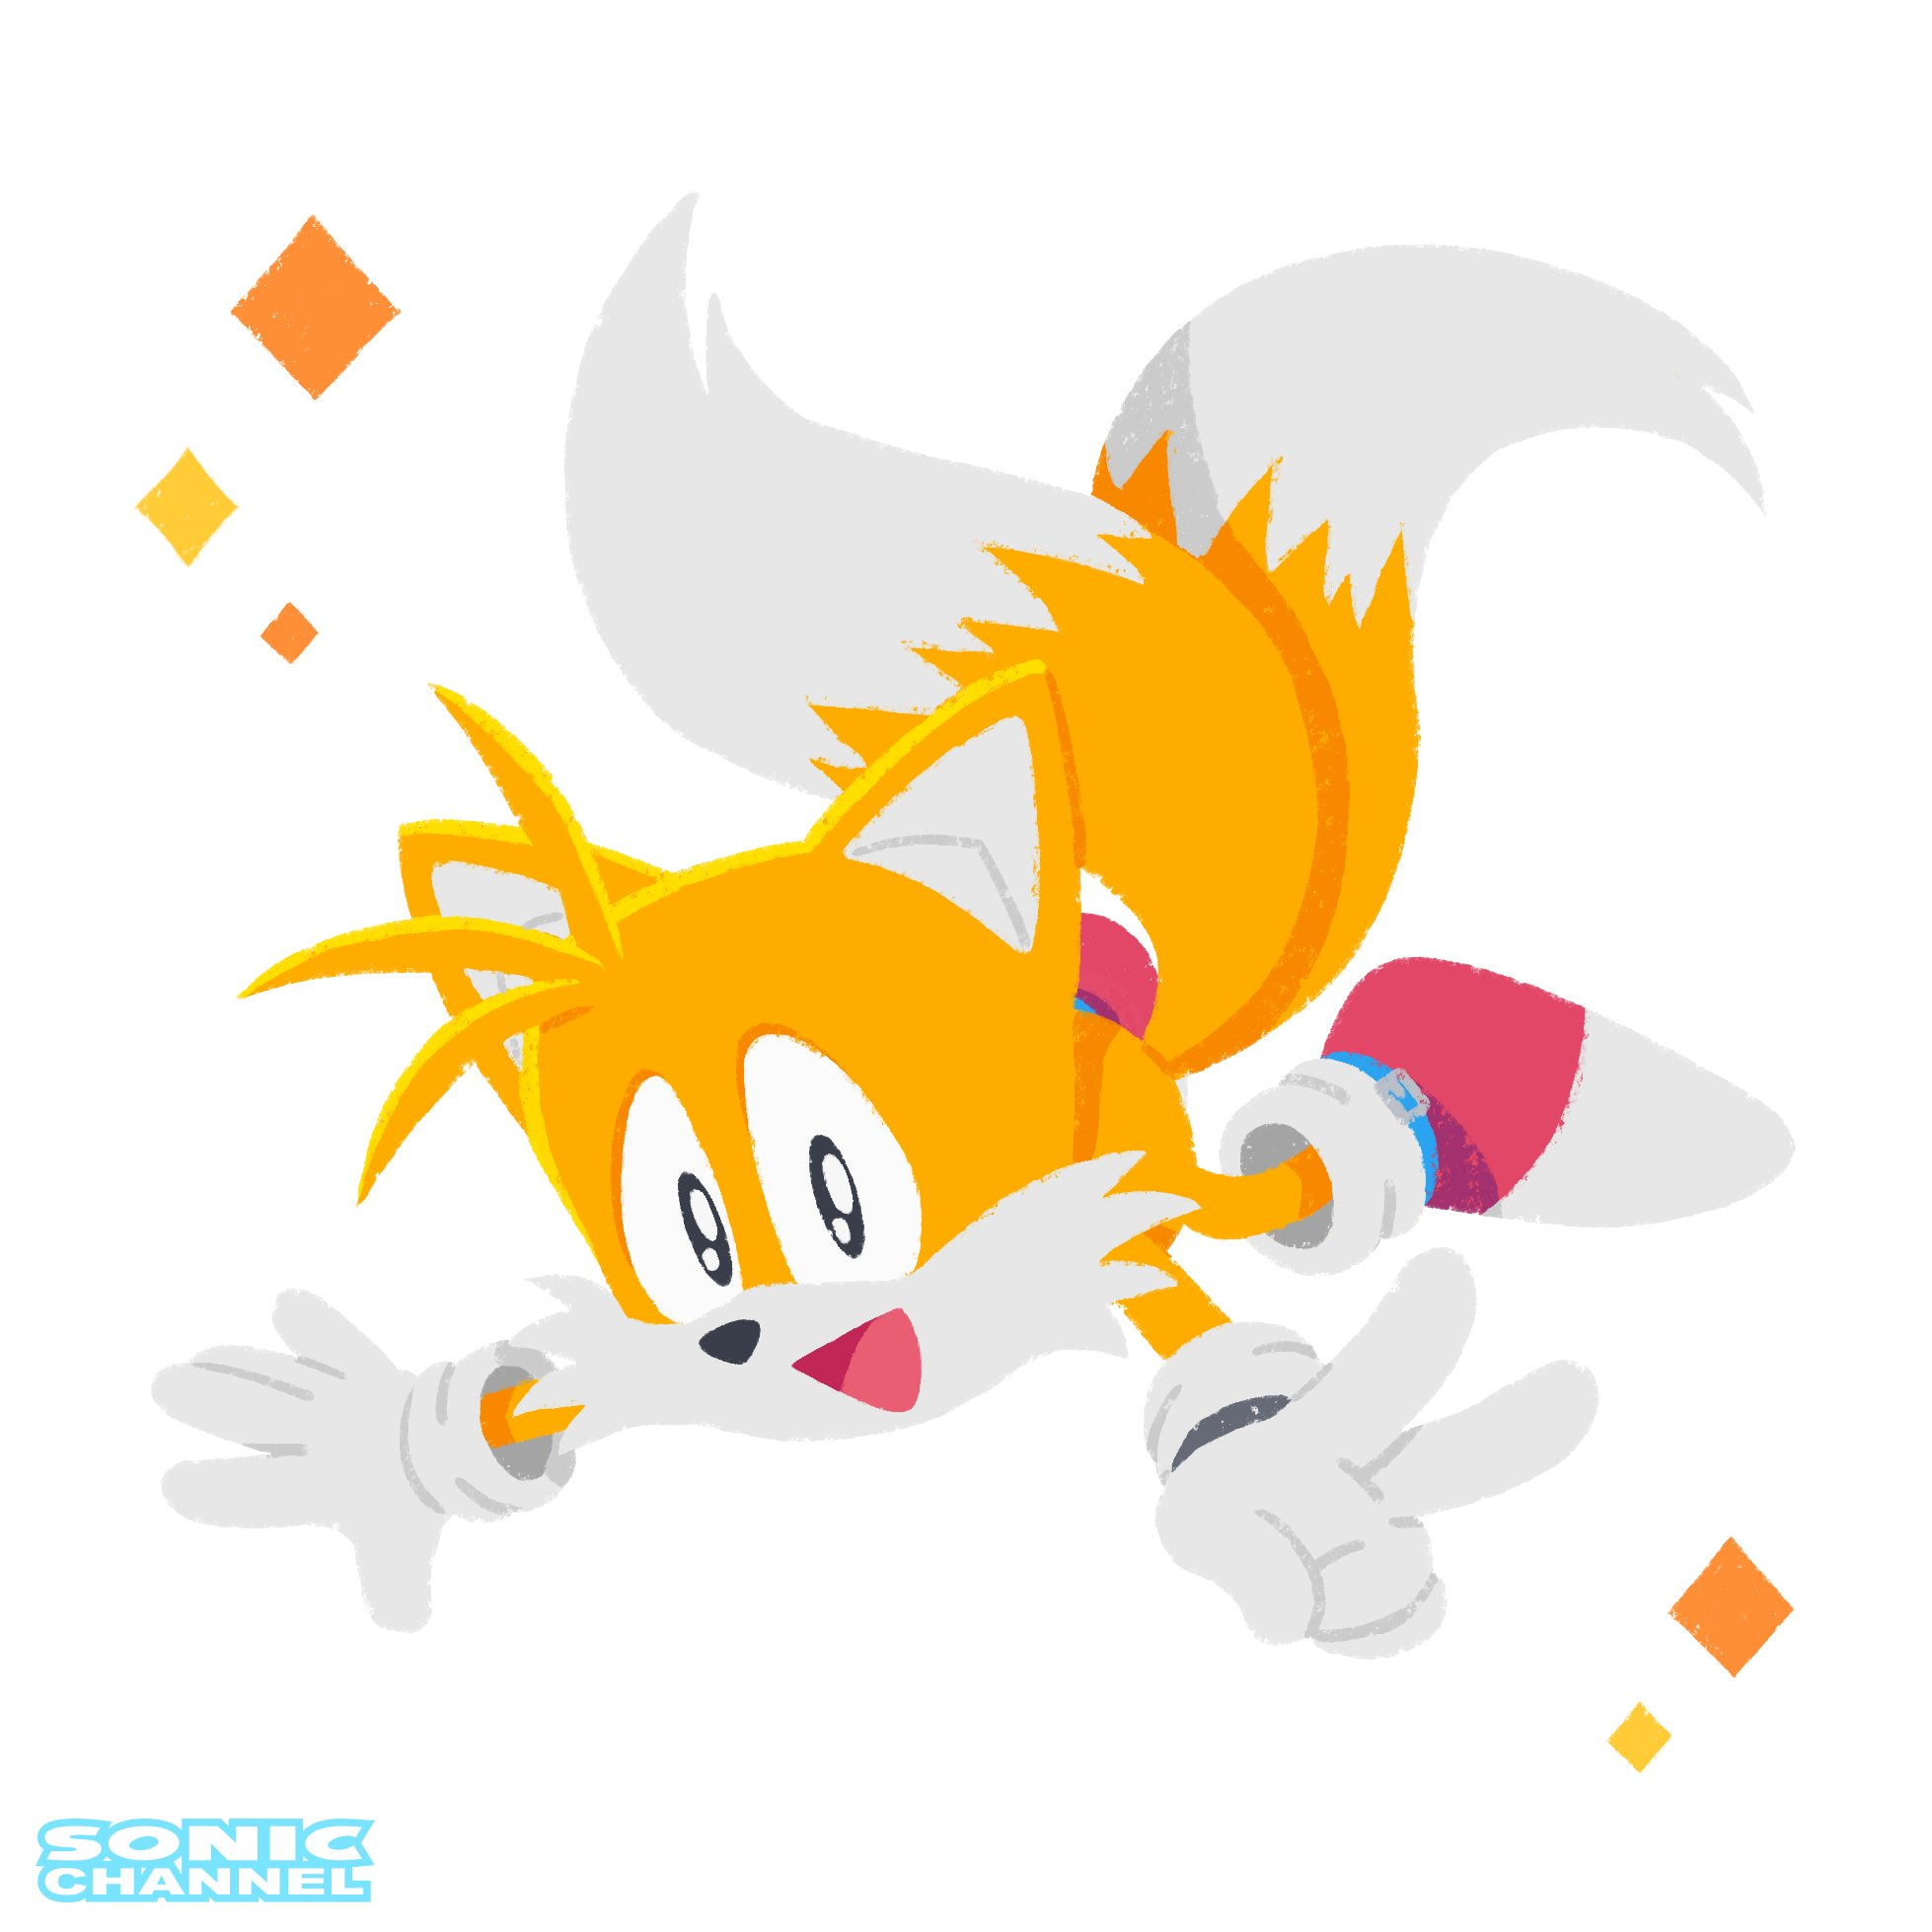 New Sonic Channel Sonic 2 29th Anniversary Art Revealed – SoaH City